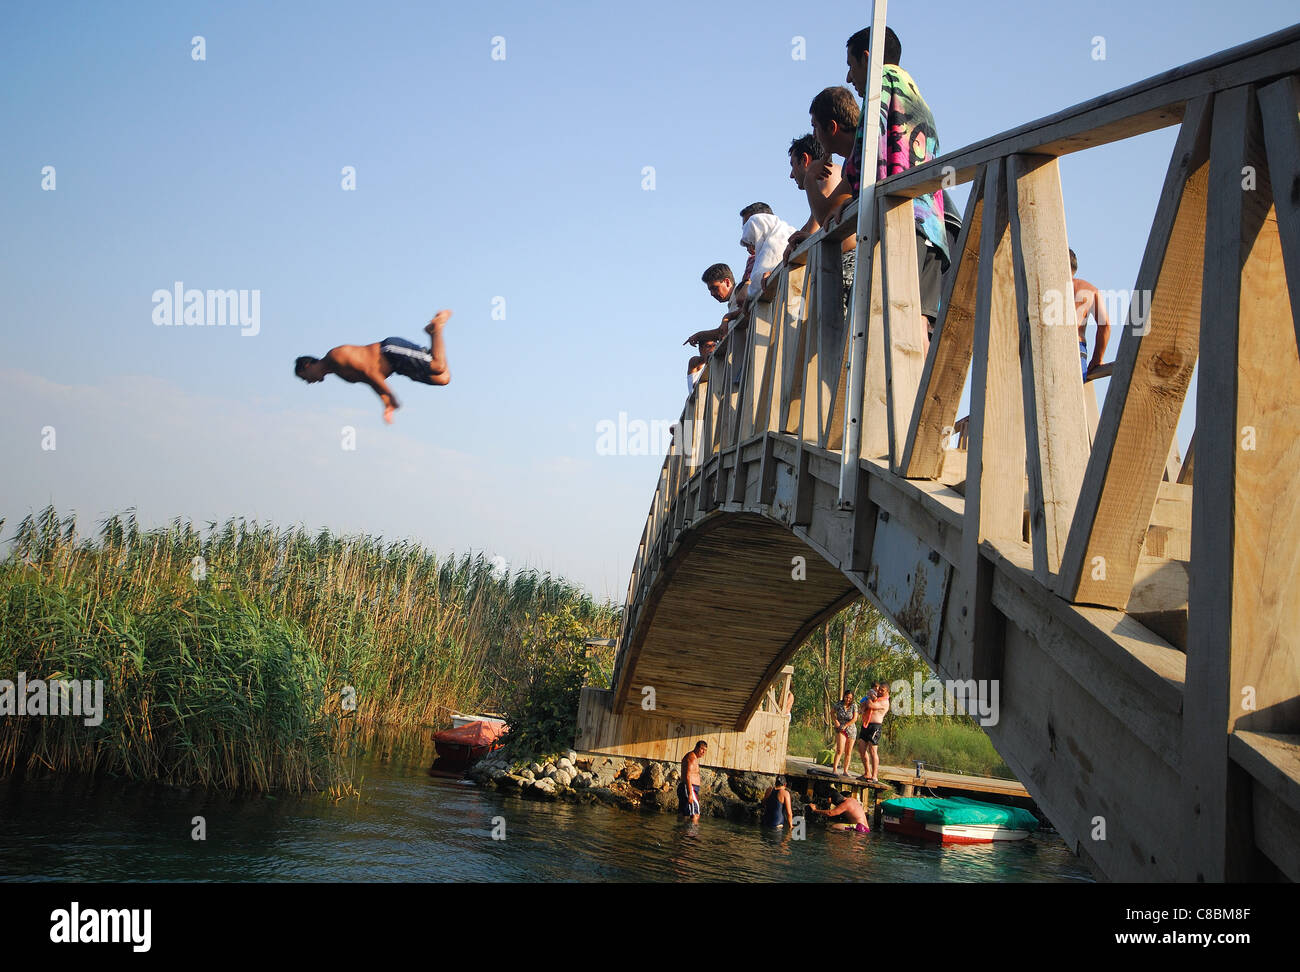 AKYAKA, TURKEY. A man diving off a wooden bridge into the Azmak river. 2011. Stock Photo